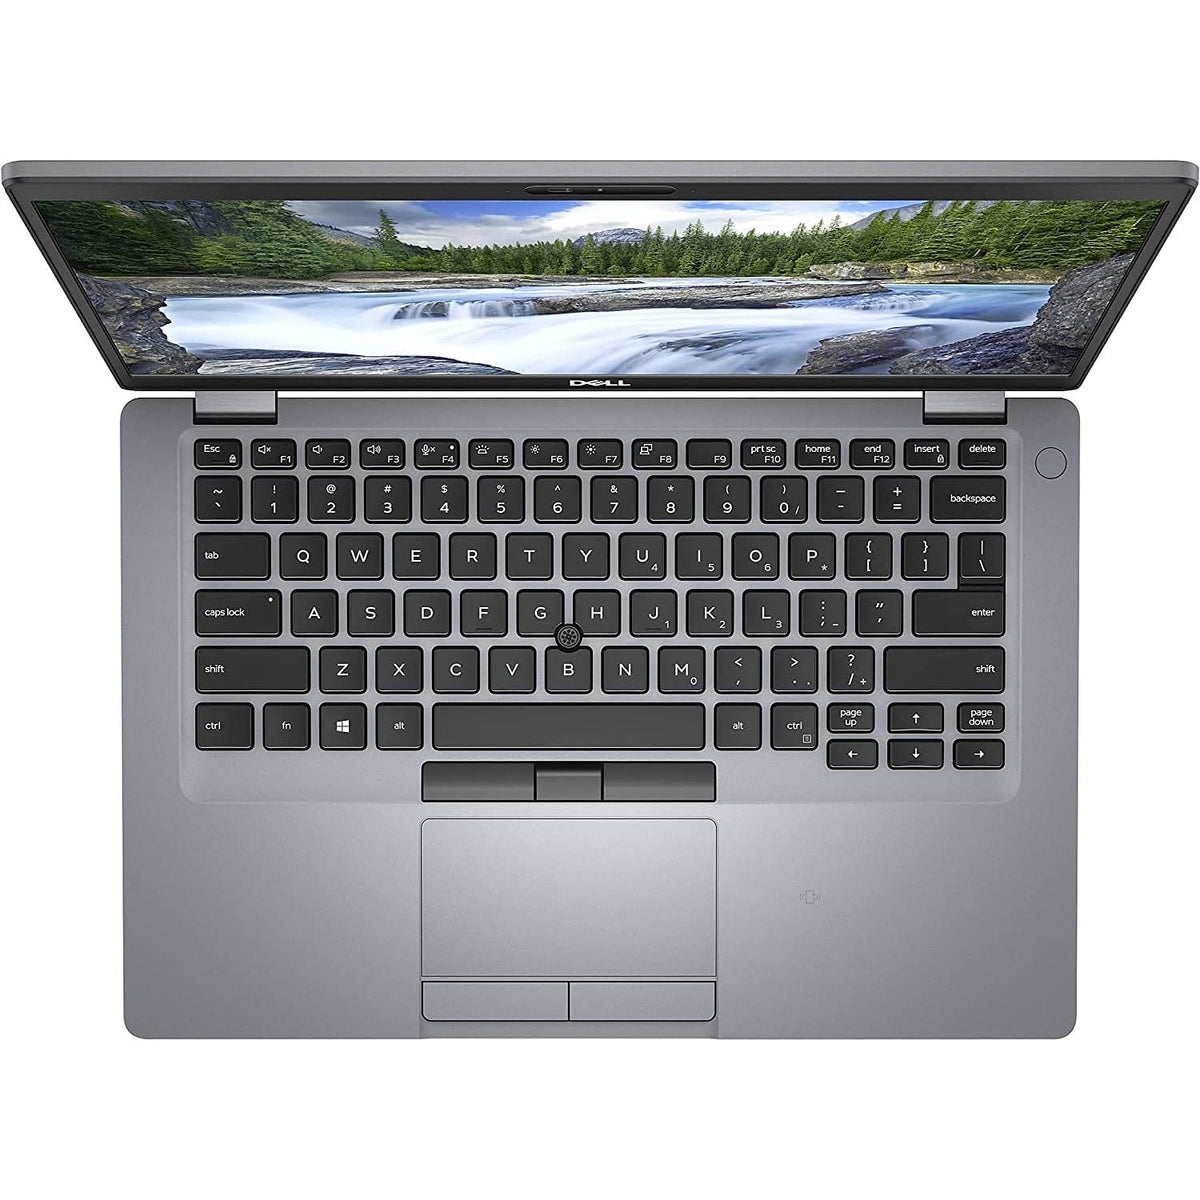 Discount PC - Dell Latitude 5410 Laptop Top View